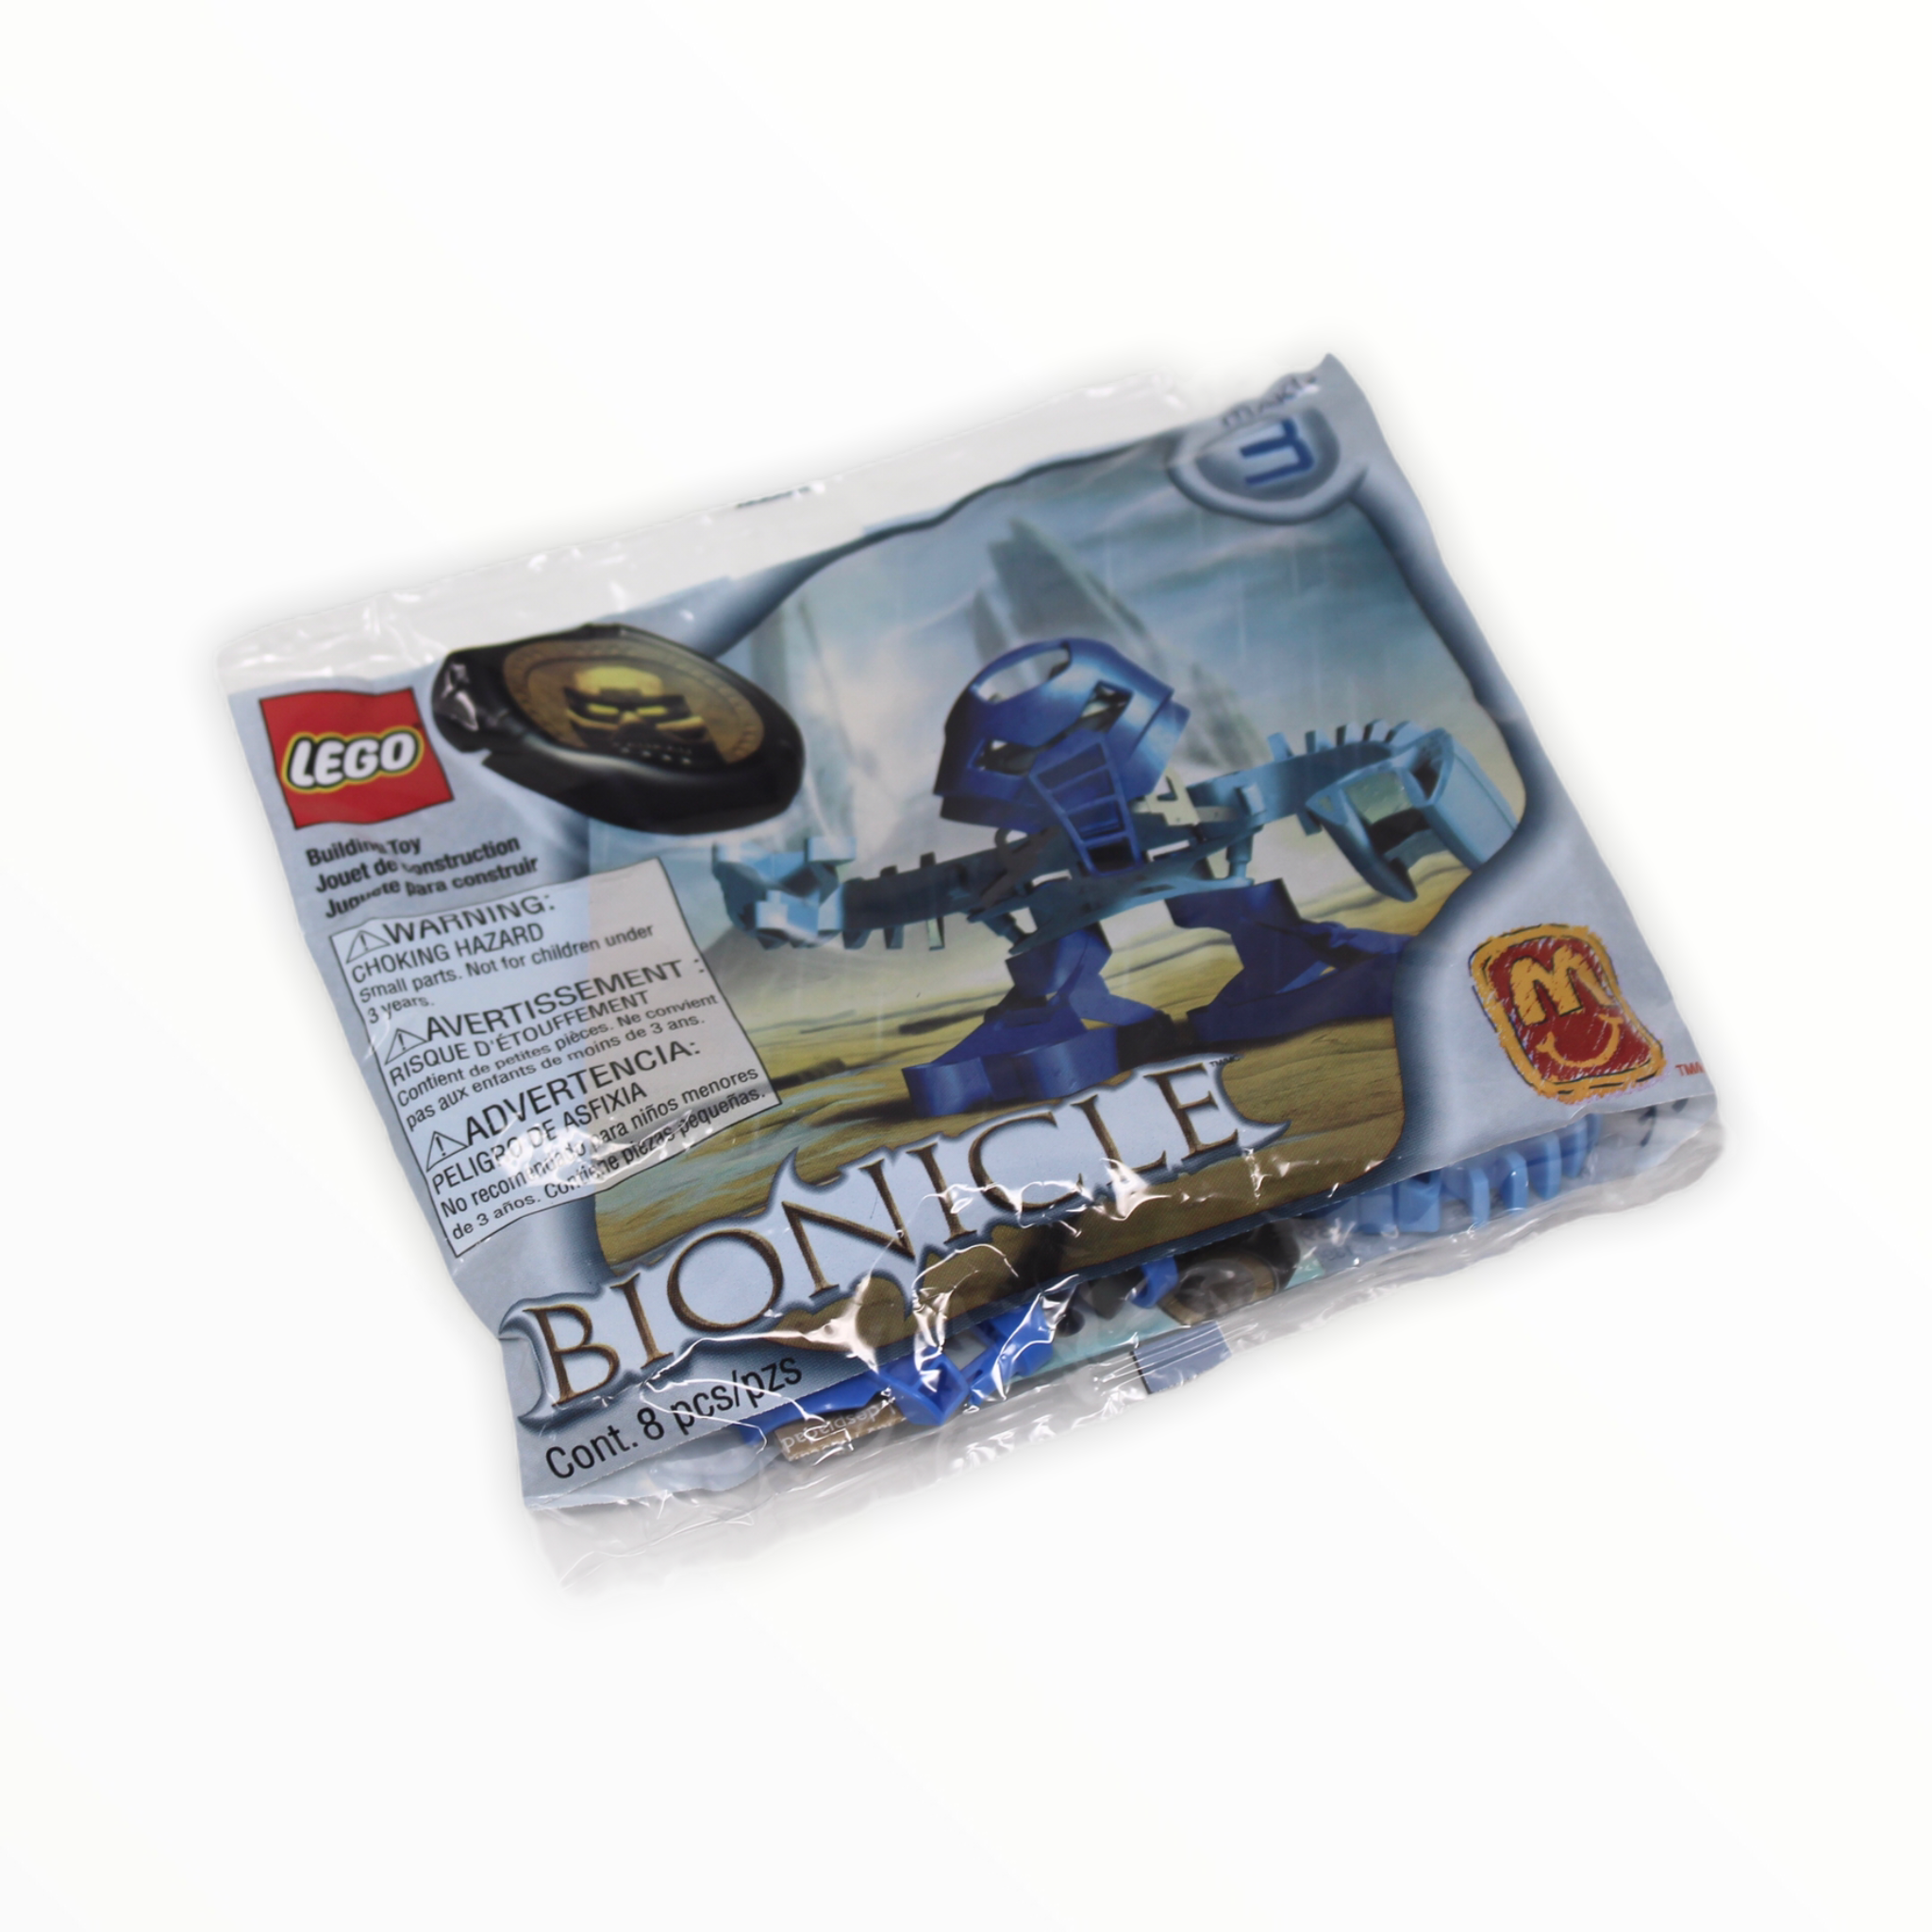 Polybag 1390 Bionicle Maku